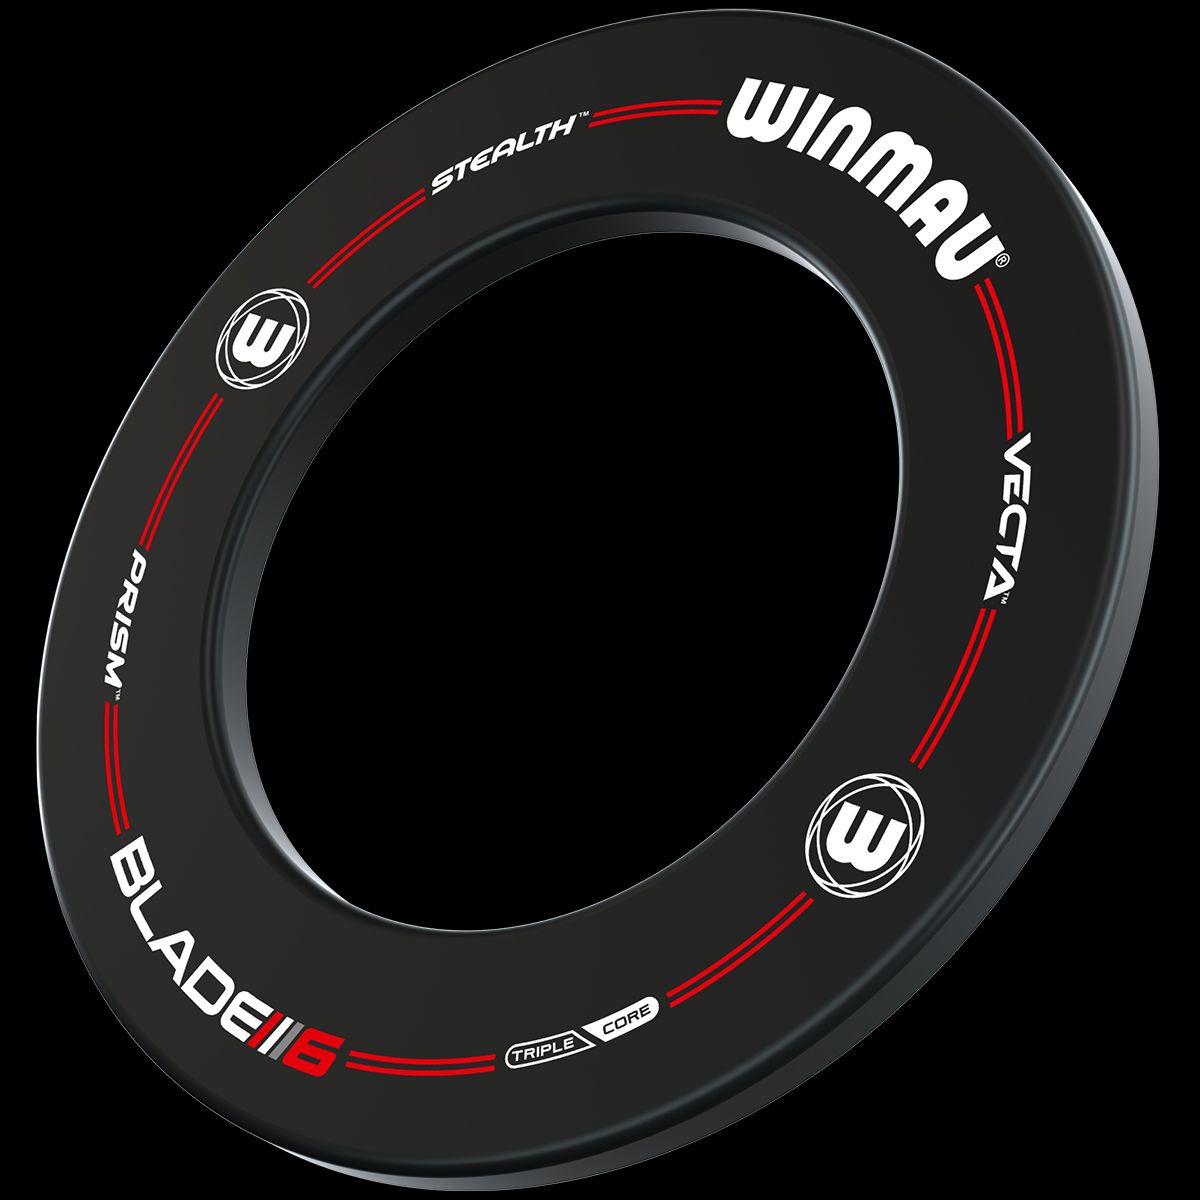 WINMAU - Pro-Line Black Dartboard Surround